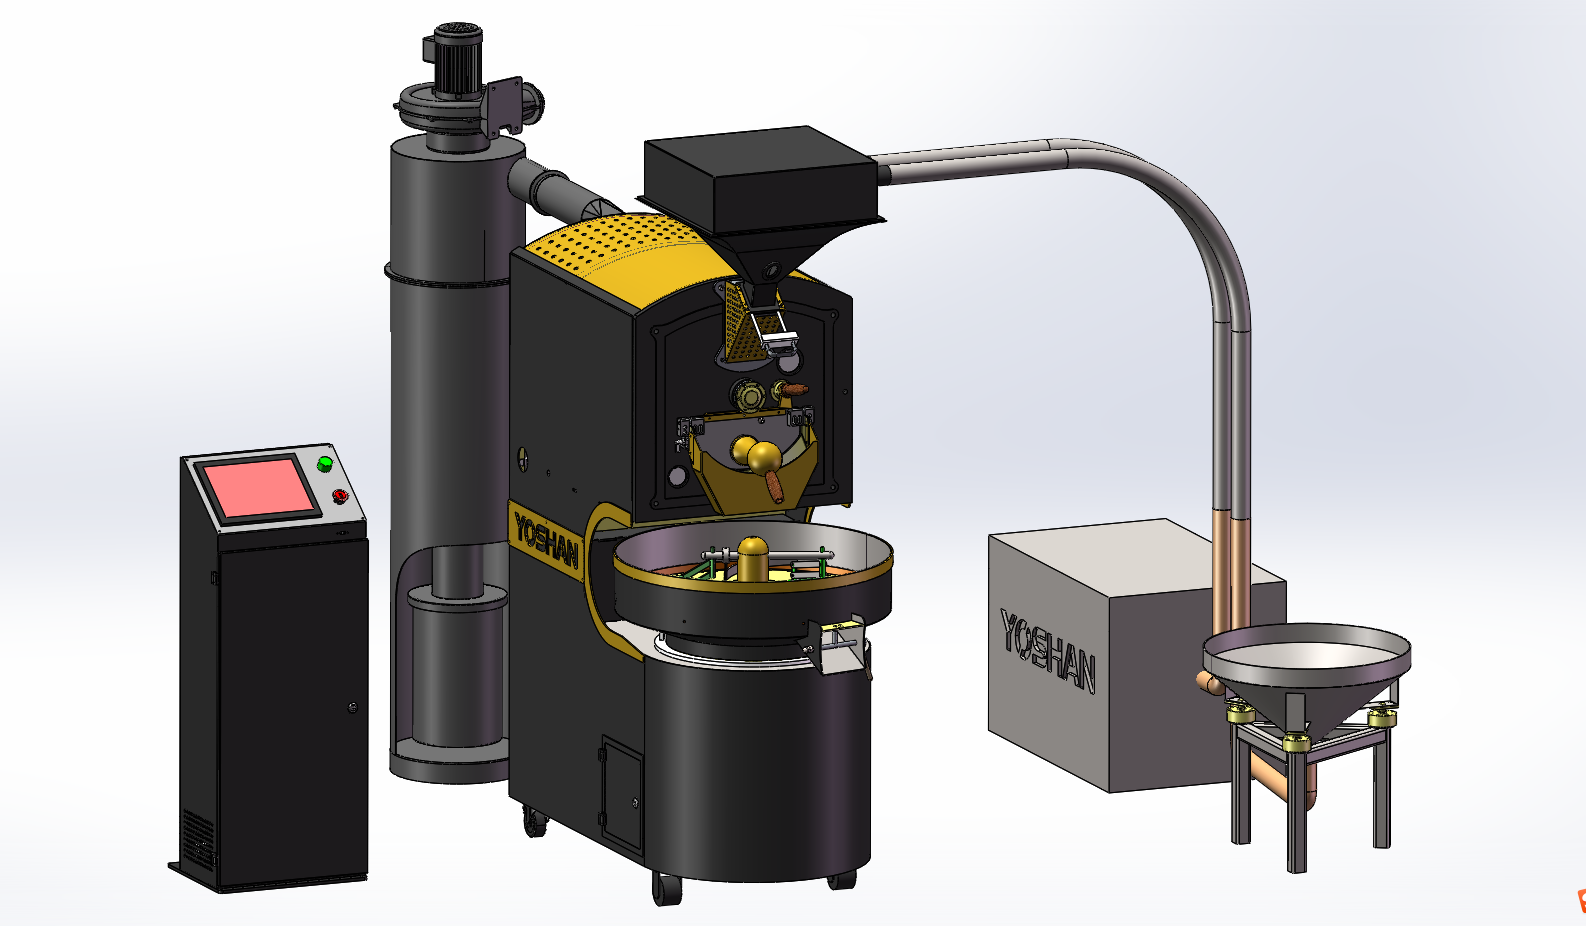 Giant G6 巨人G6master 高端智能咖啡烘焙機 PLC自動烘焙曲線復制運行  鑄鐵工藝